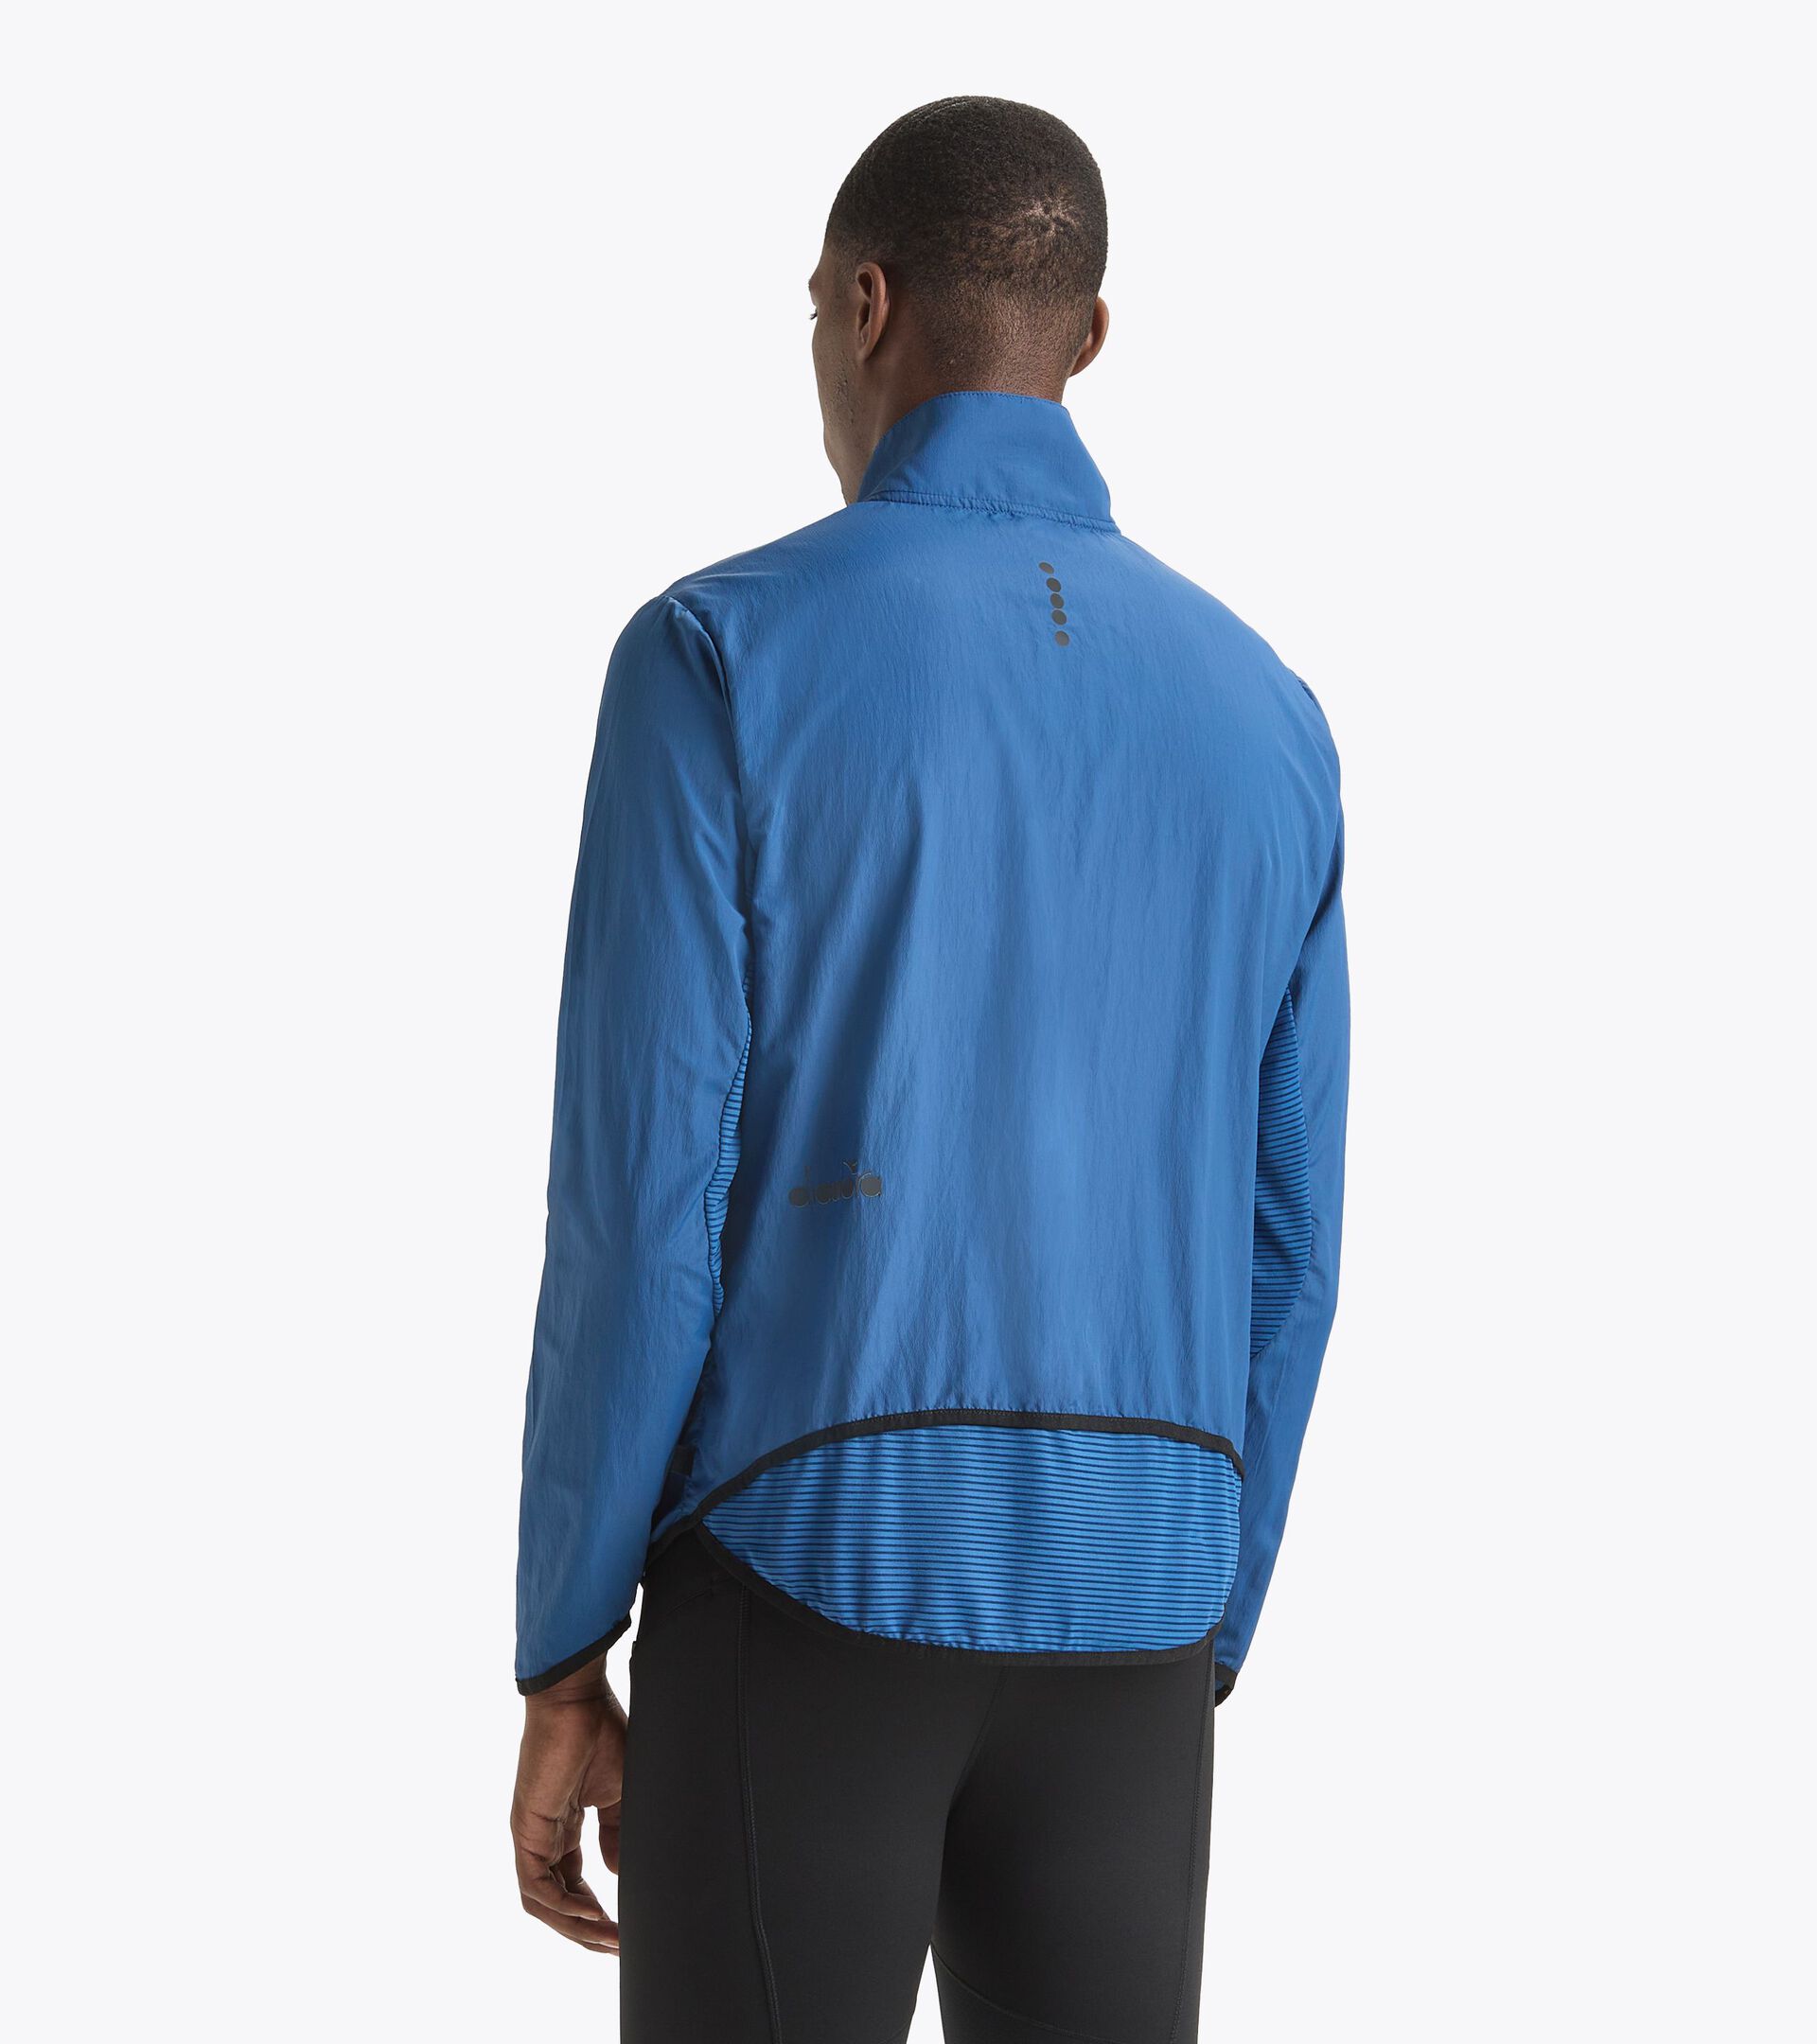 Windproof water-resistant jacket - Men MULTILAYER JACKET DUTCH BLUE/BLACK - Diadora